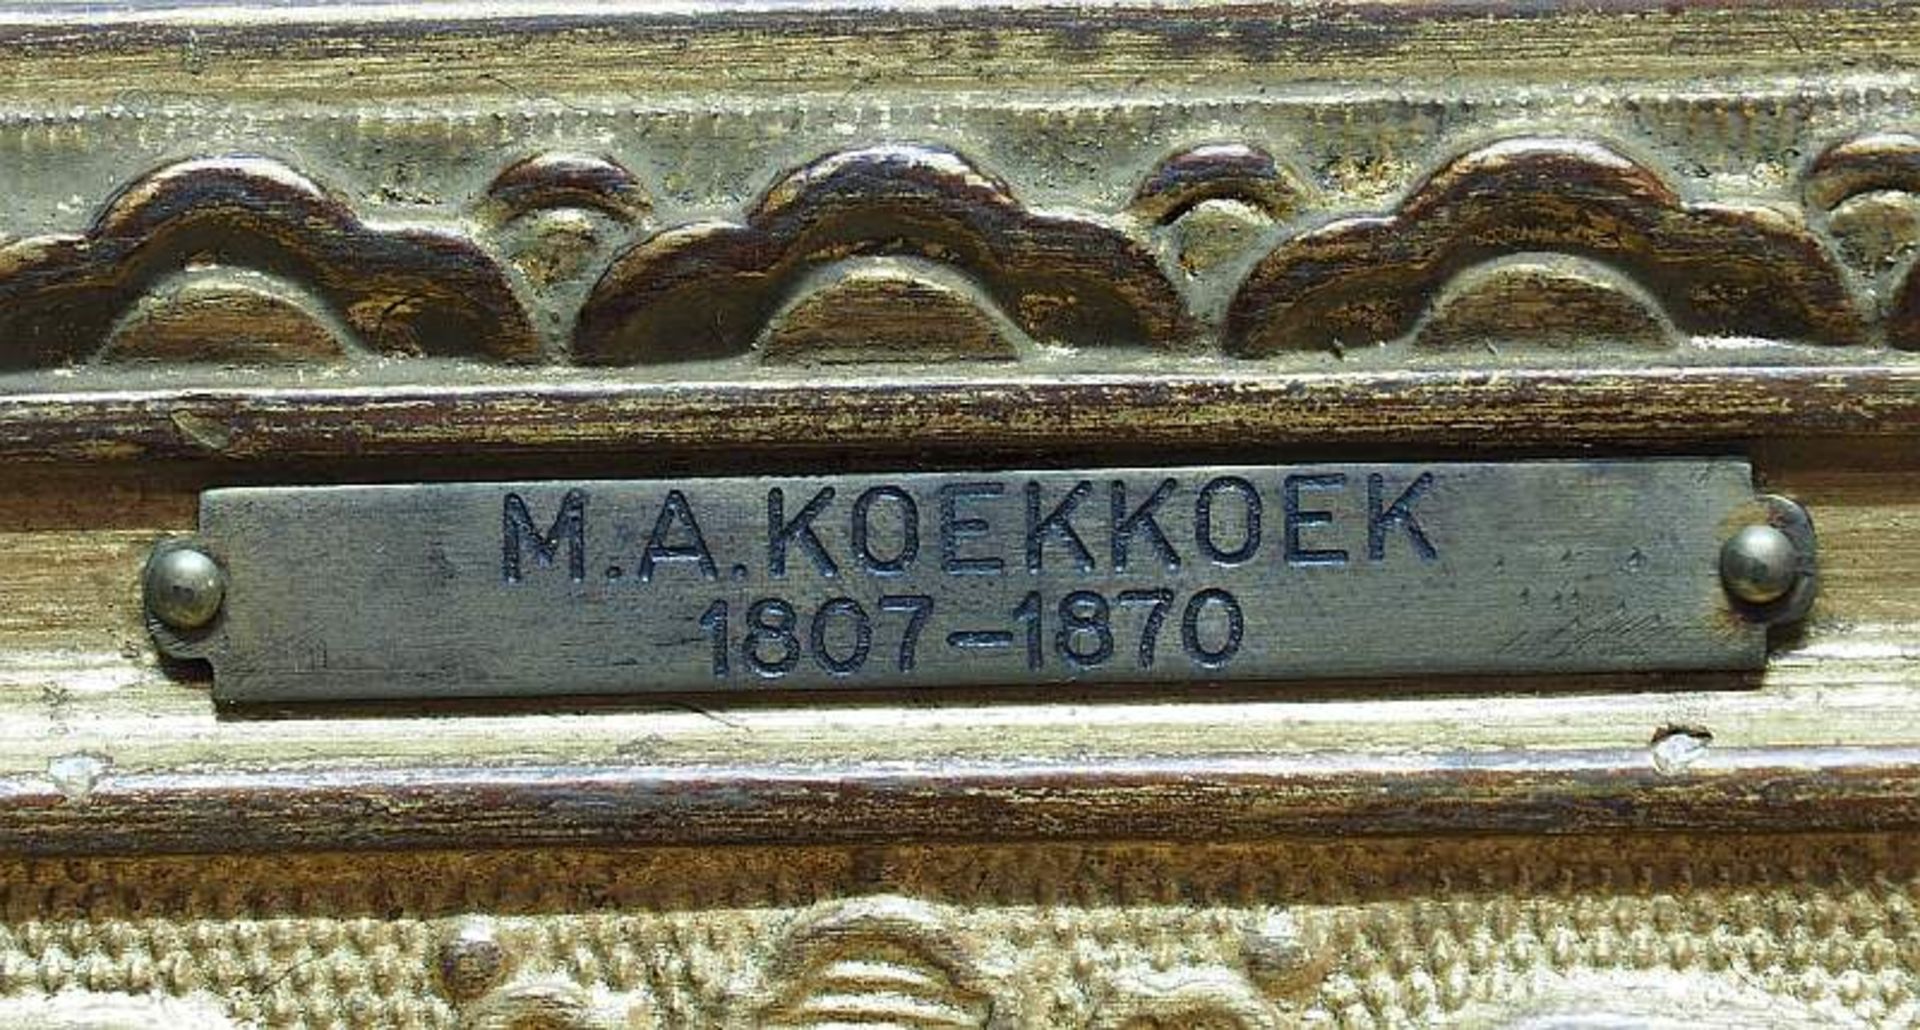 KOEKKOEK, Marinus Adrianus d.Ä. zugeschrieben. KOEKKOEK, Marinus Adrianus d.Ä. zugeschrieben. 1807 - Bild 5 aus 6